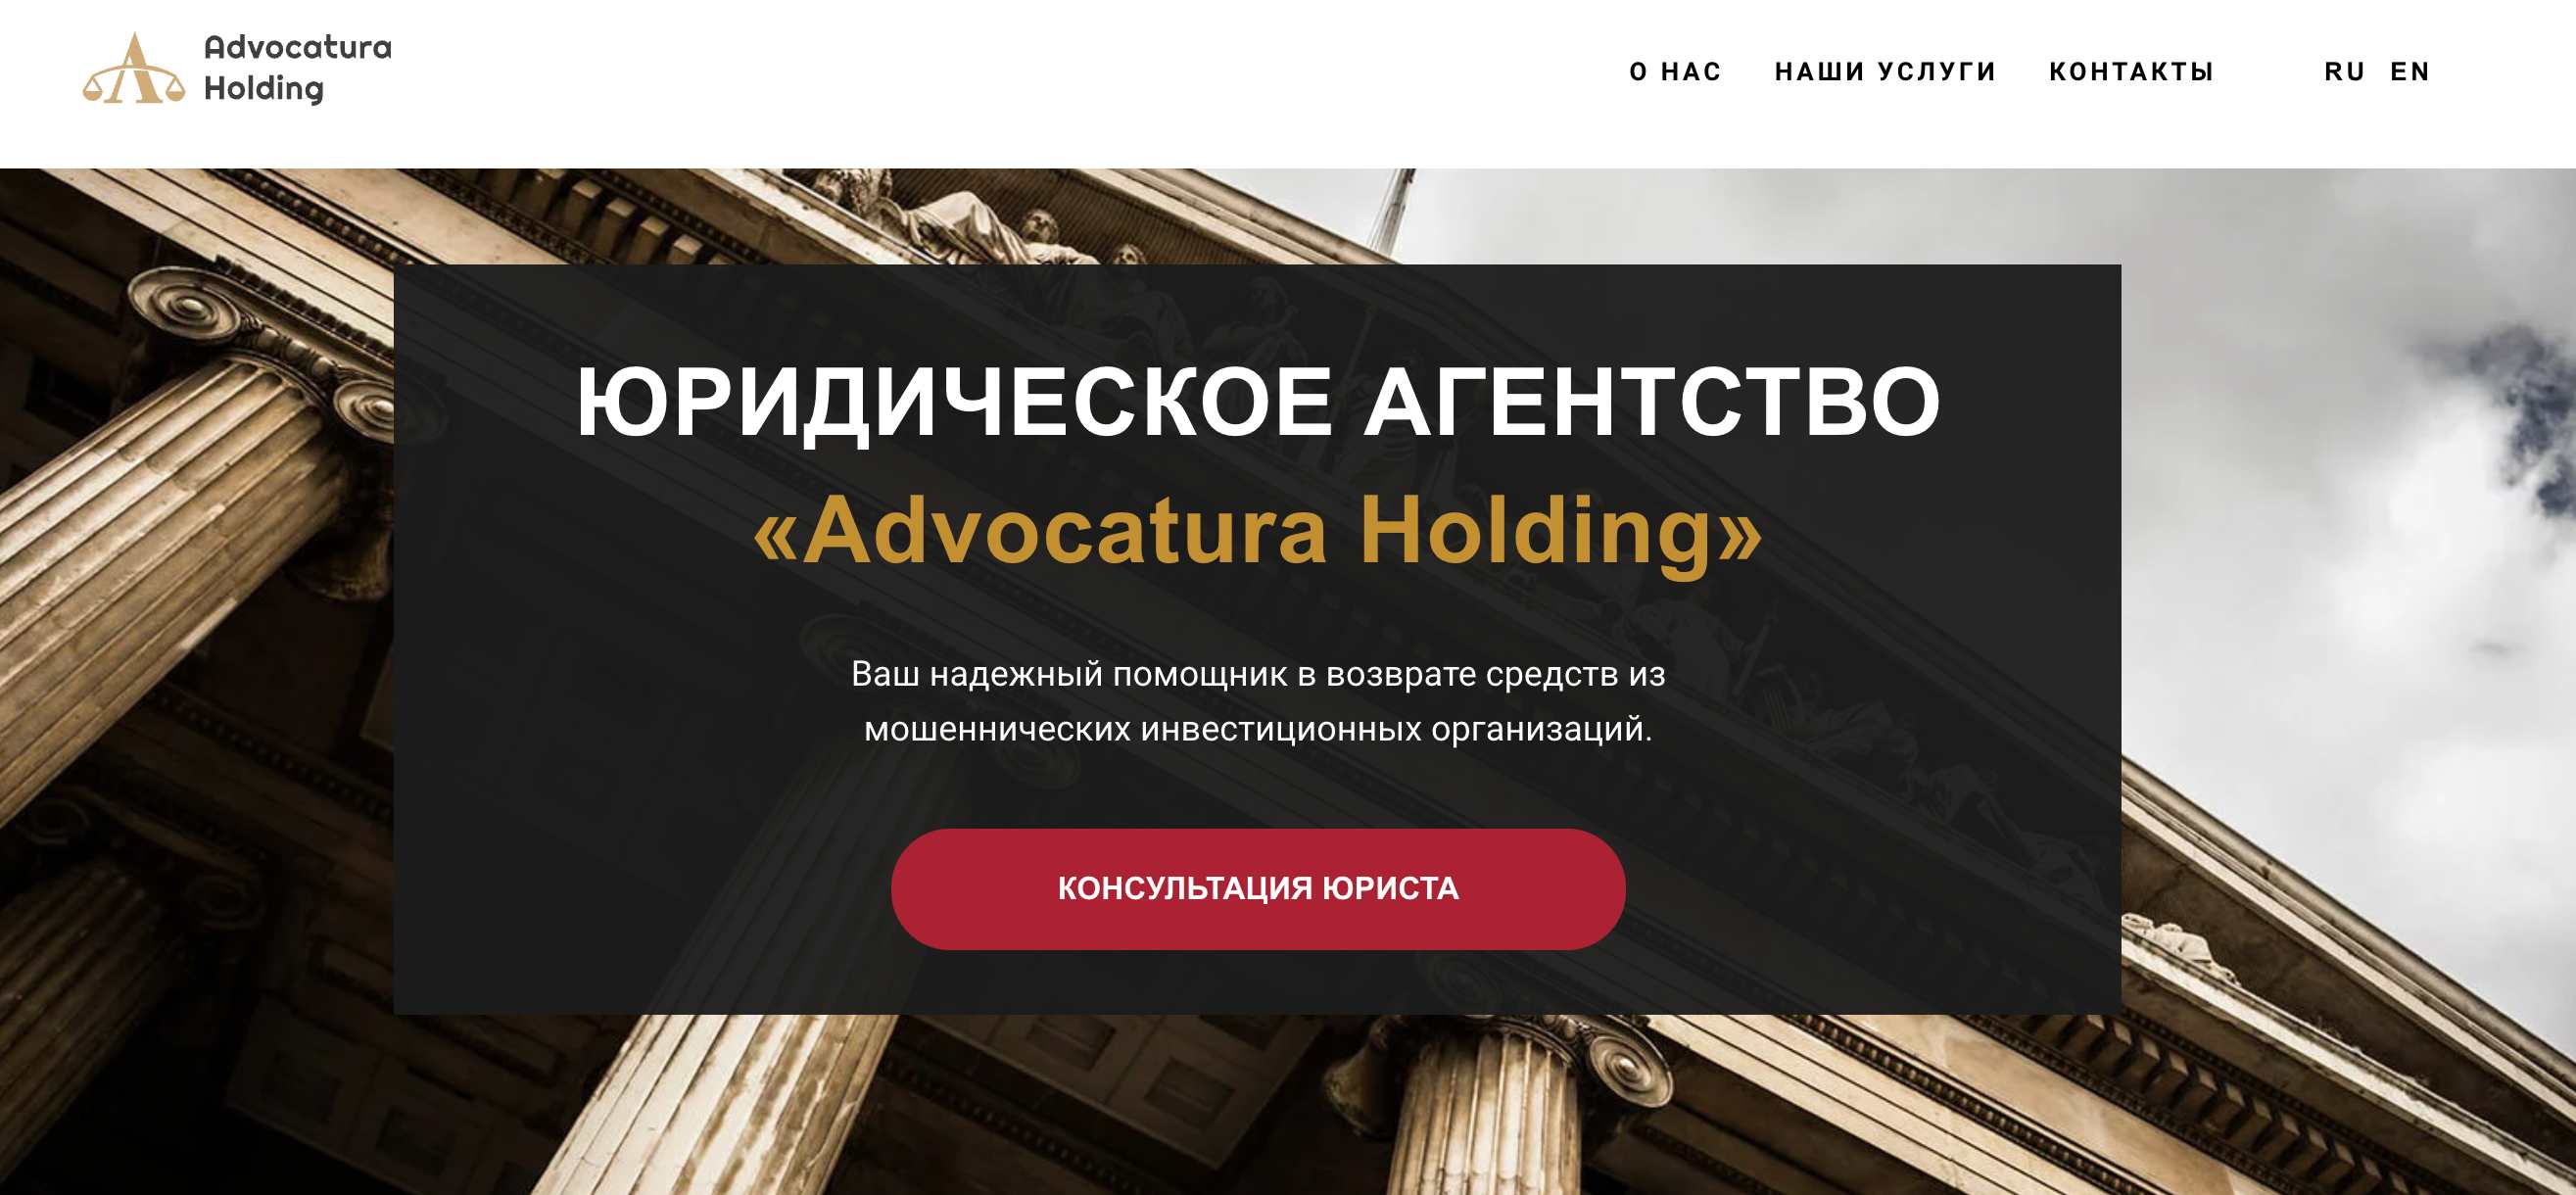 Advocatura Holding